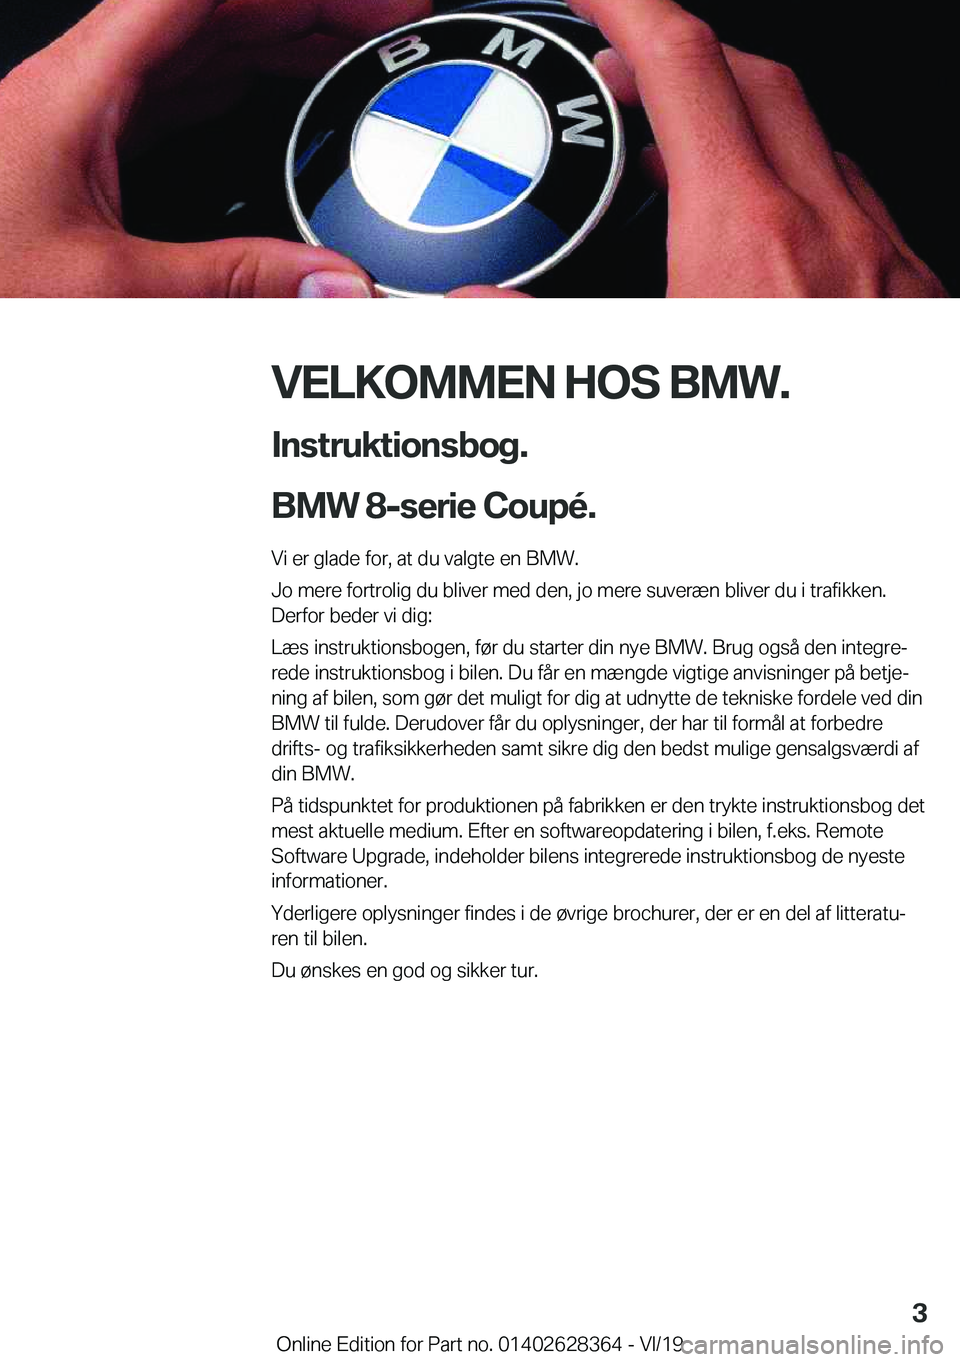 BMW 8 SERIES COUPE 2020  InstruktionsbØger (in Danish) �V�E�L�K�O�M�M�E�N��H�O�S��B�M�W�.
�I�n�s�t�r�u�k�t�i�o�n�s�b�o�g�.
�B�M�W��8�-�s�e�r�i�e��C�o�u�p�